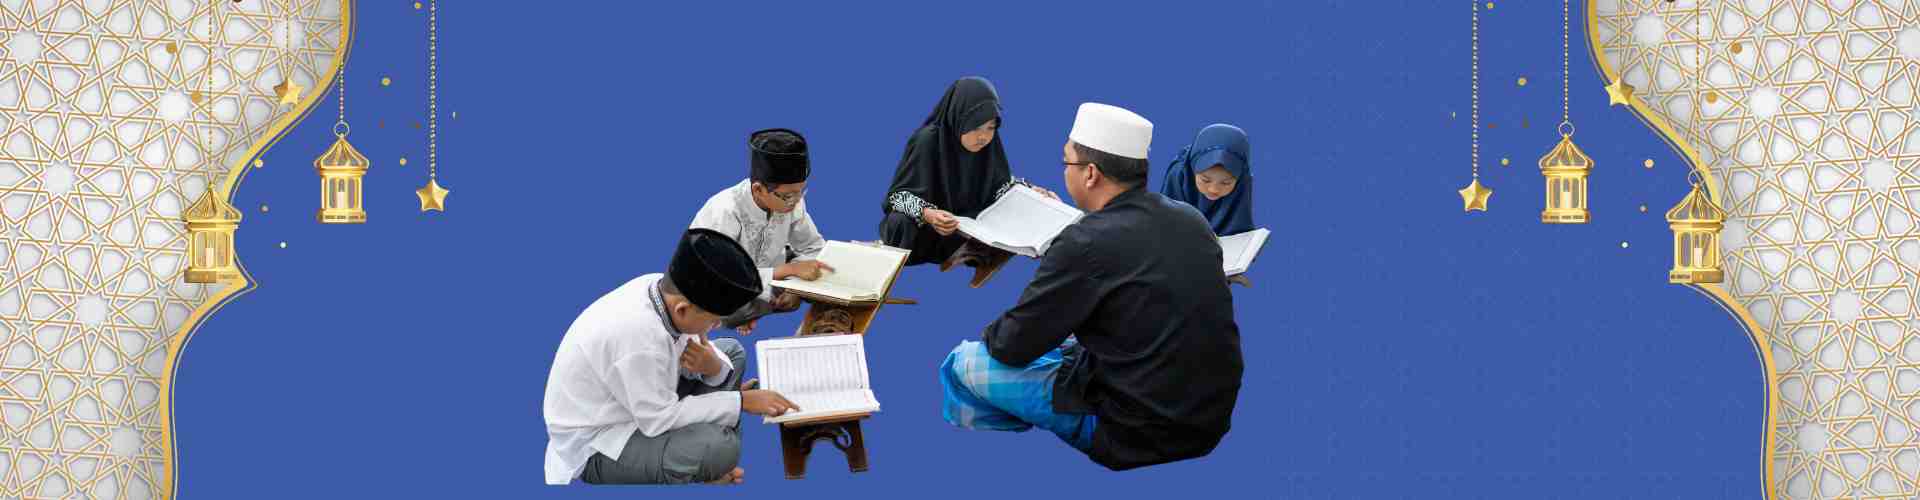 Develop Moral values in preschoolers during Ramadan